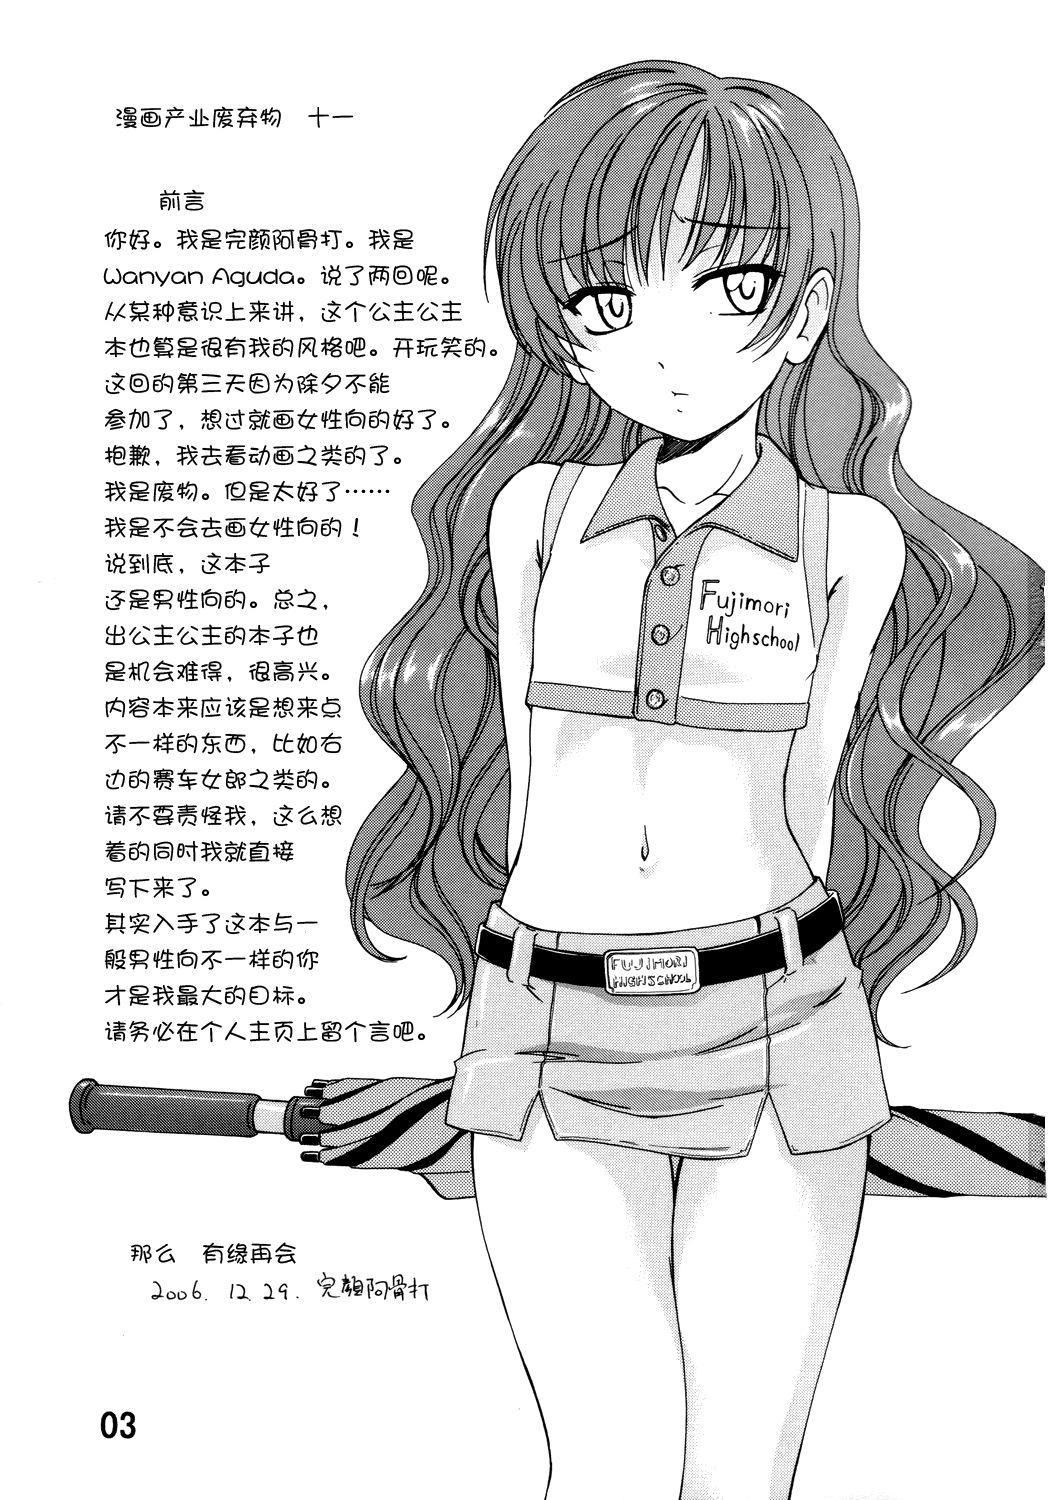 Hardcore Rough Sex Manga Sangyou Haikibutsu 11 - Comic Industrial Wastes 11 - Princess princess Huge - Page 2